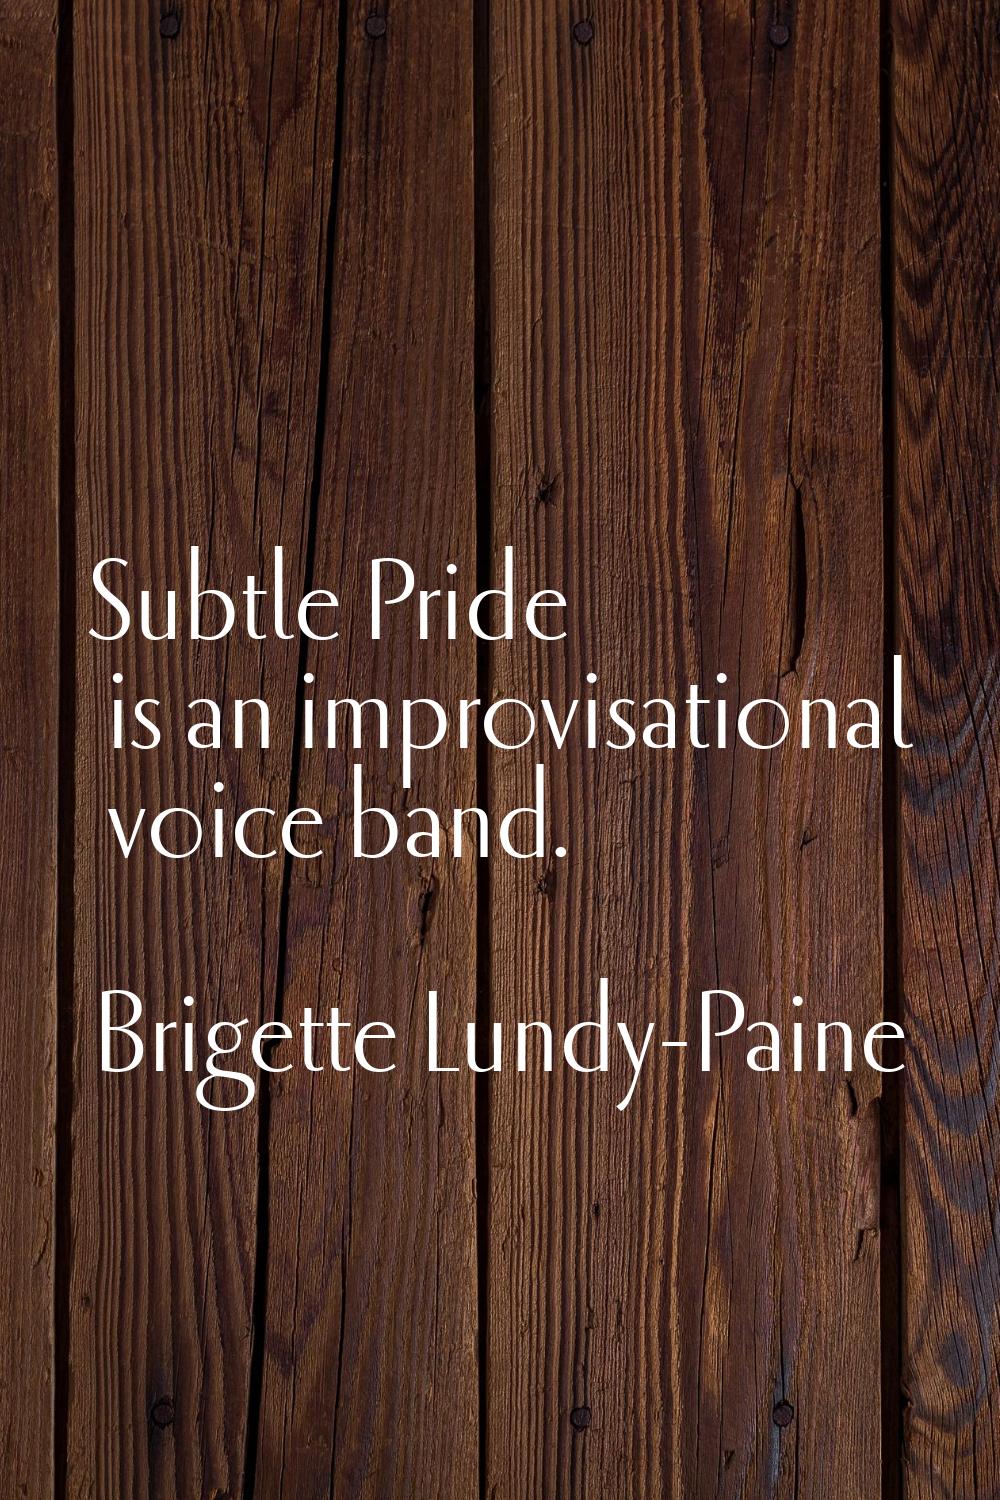 Subtle Pride is an improvisational voice band.